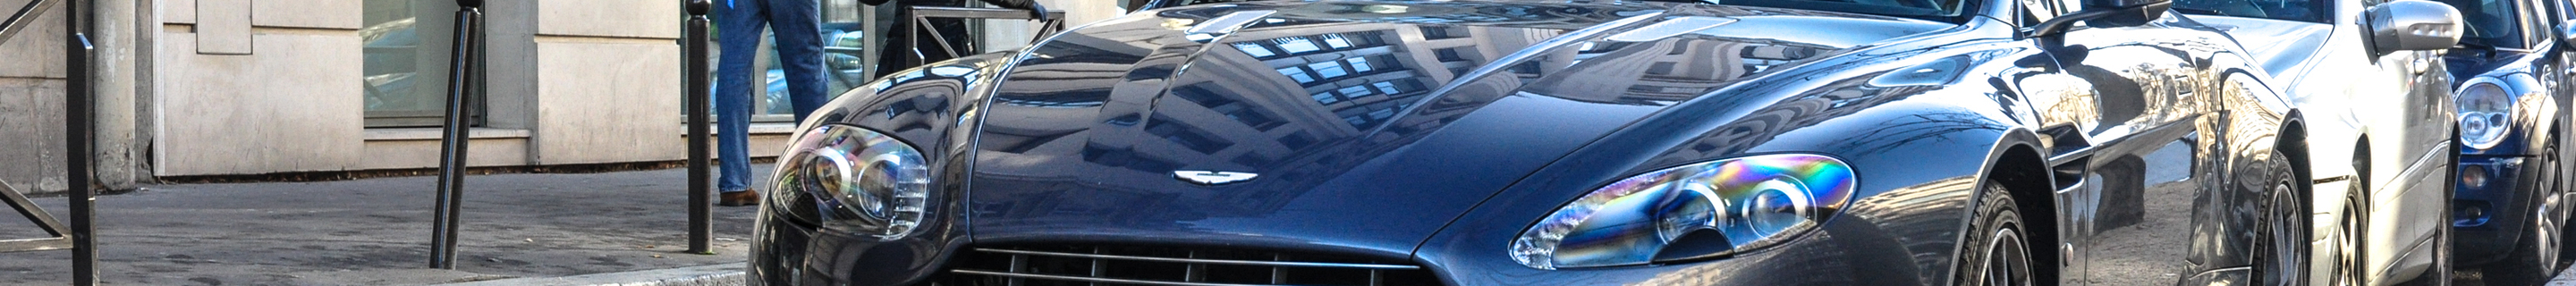 Aston Martin Mansory V8 Vantage Roadster